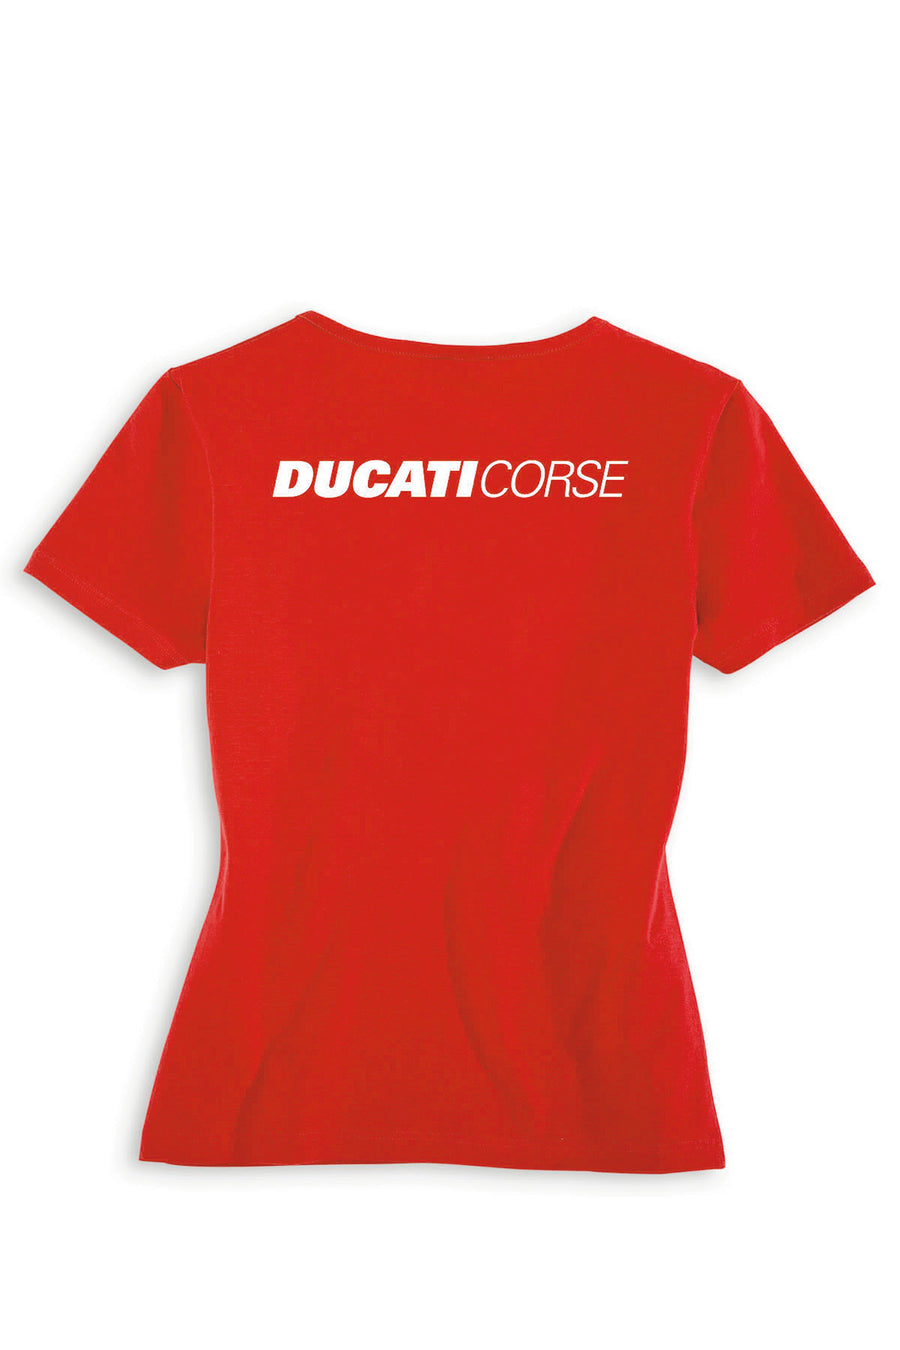 Ducati Women's Corsa Basic Short Sleeve T-Shirt